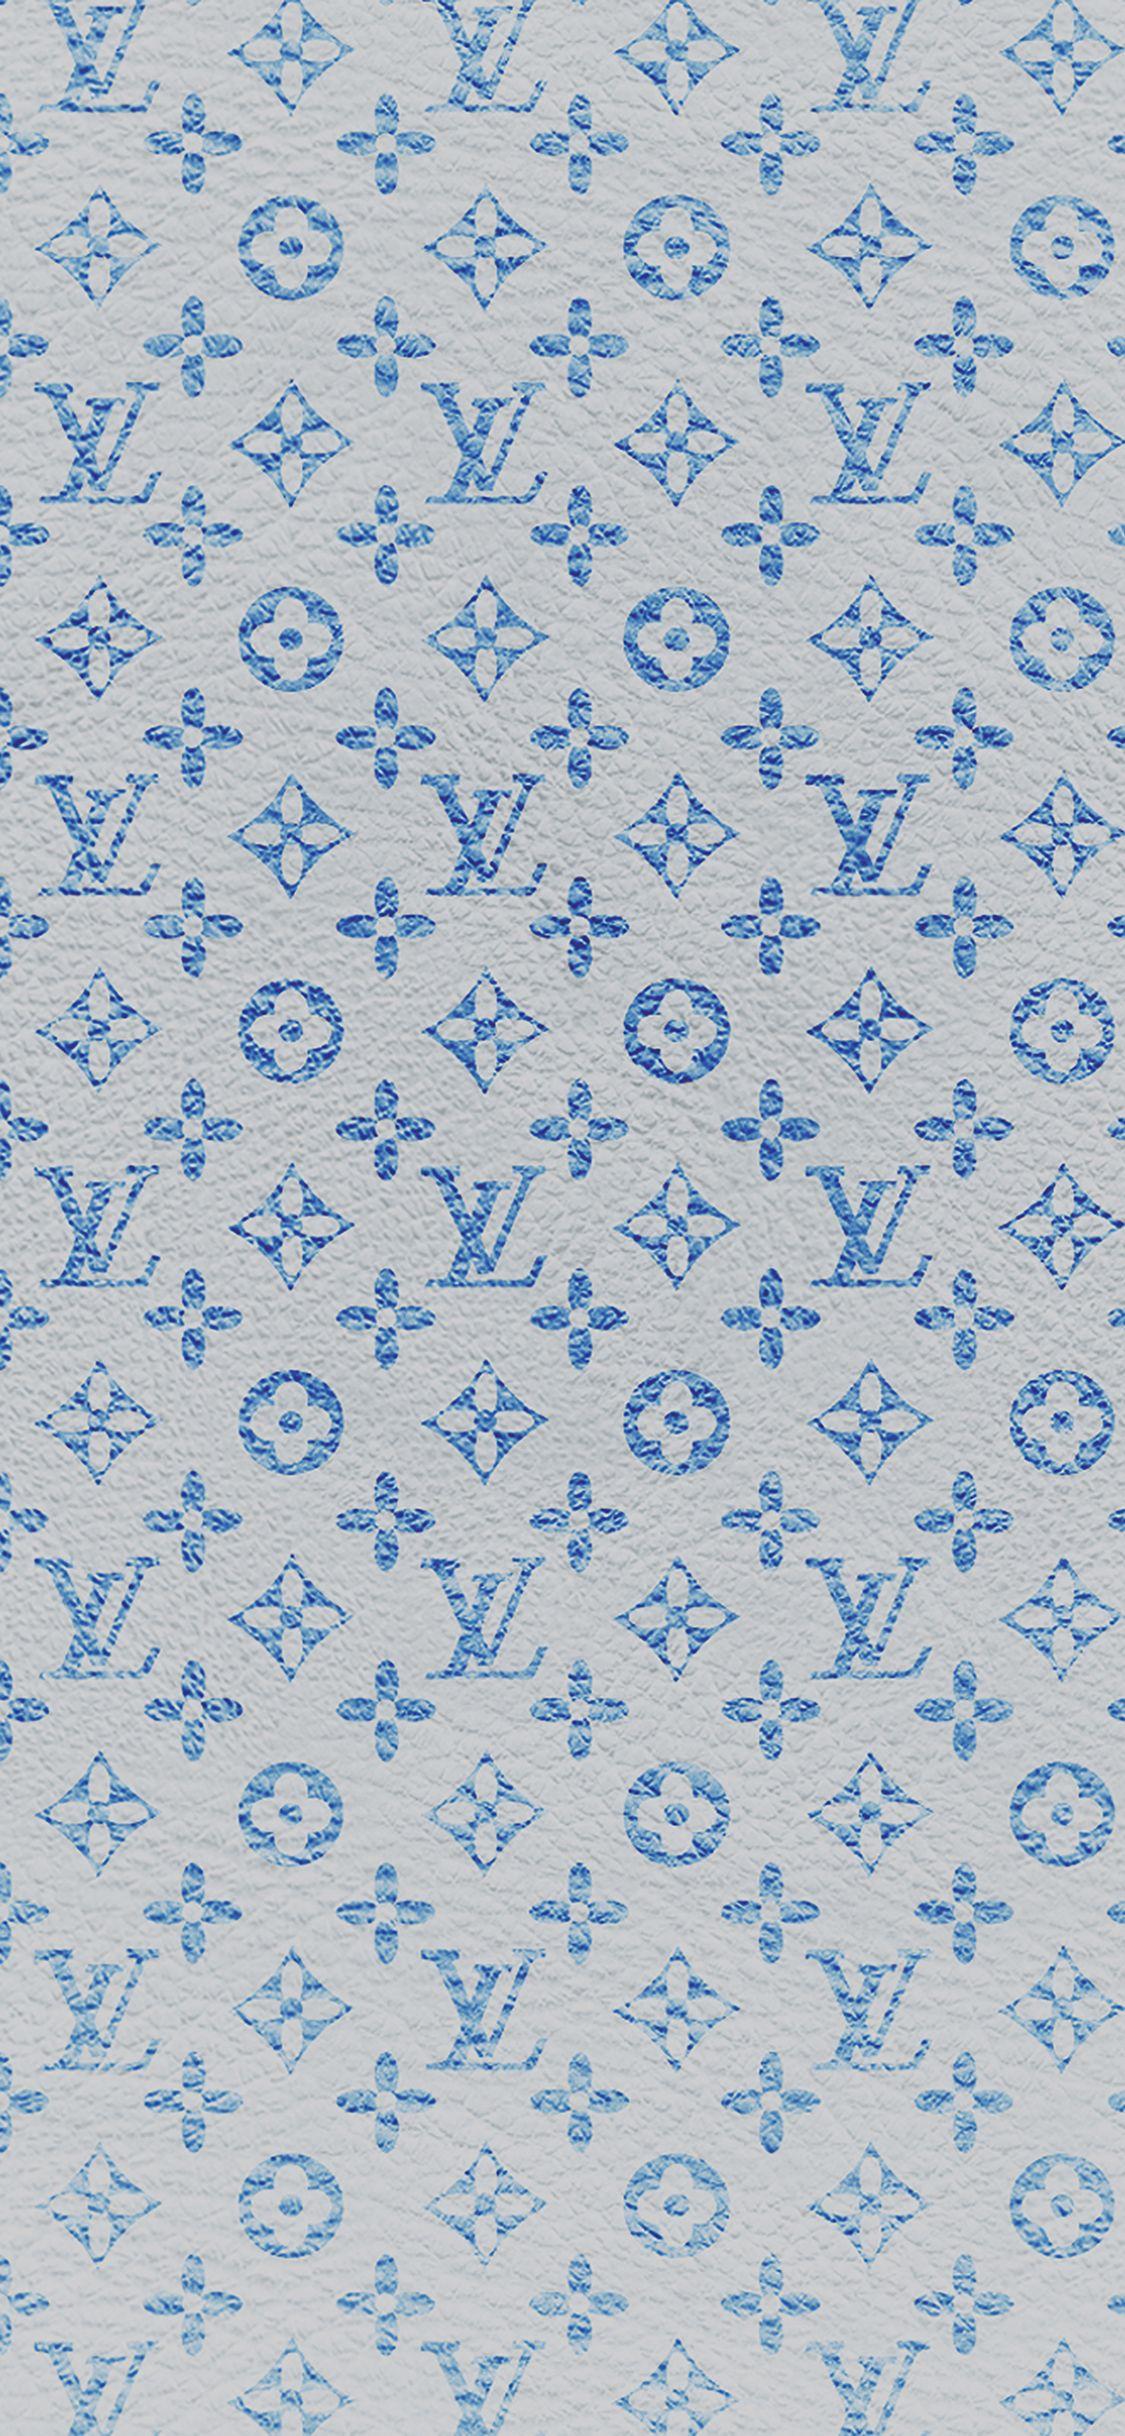 Louis Vuitton iPhone Wallpapers on WallpaperDog